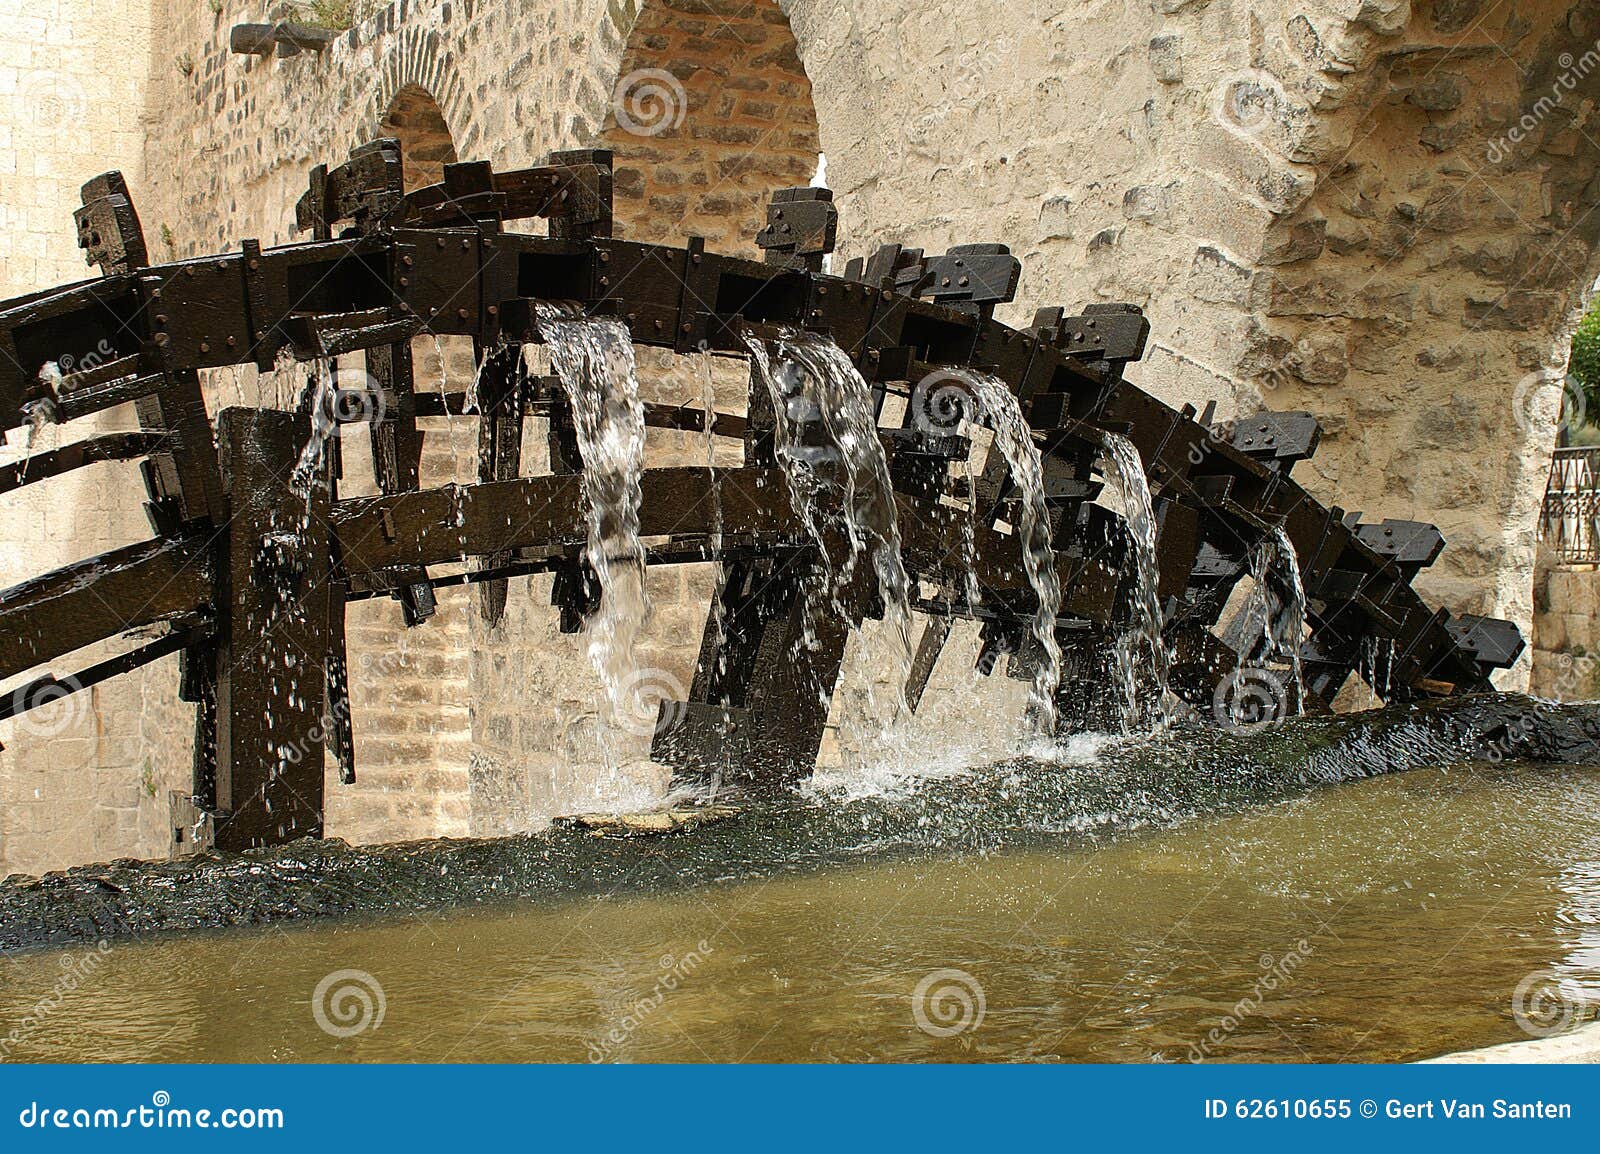 detail of wooden waterwheels in hamah in syria